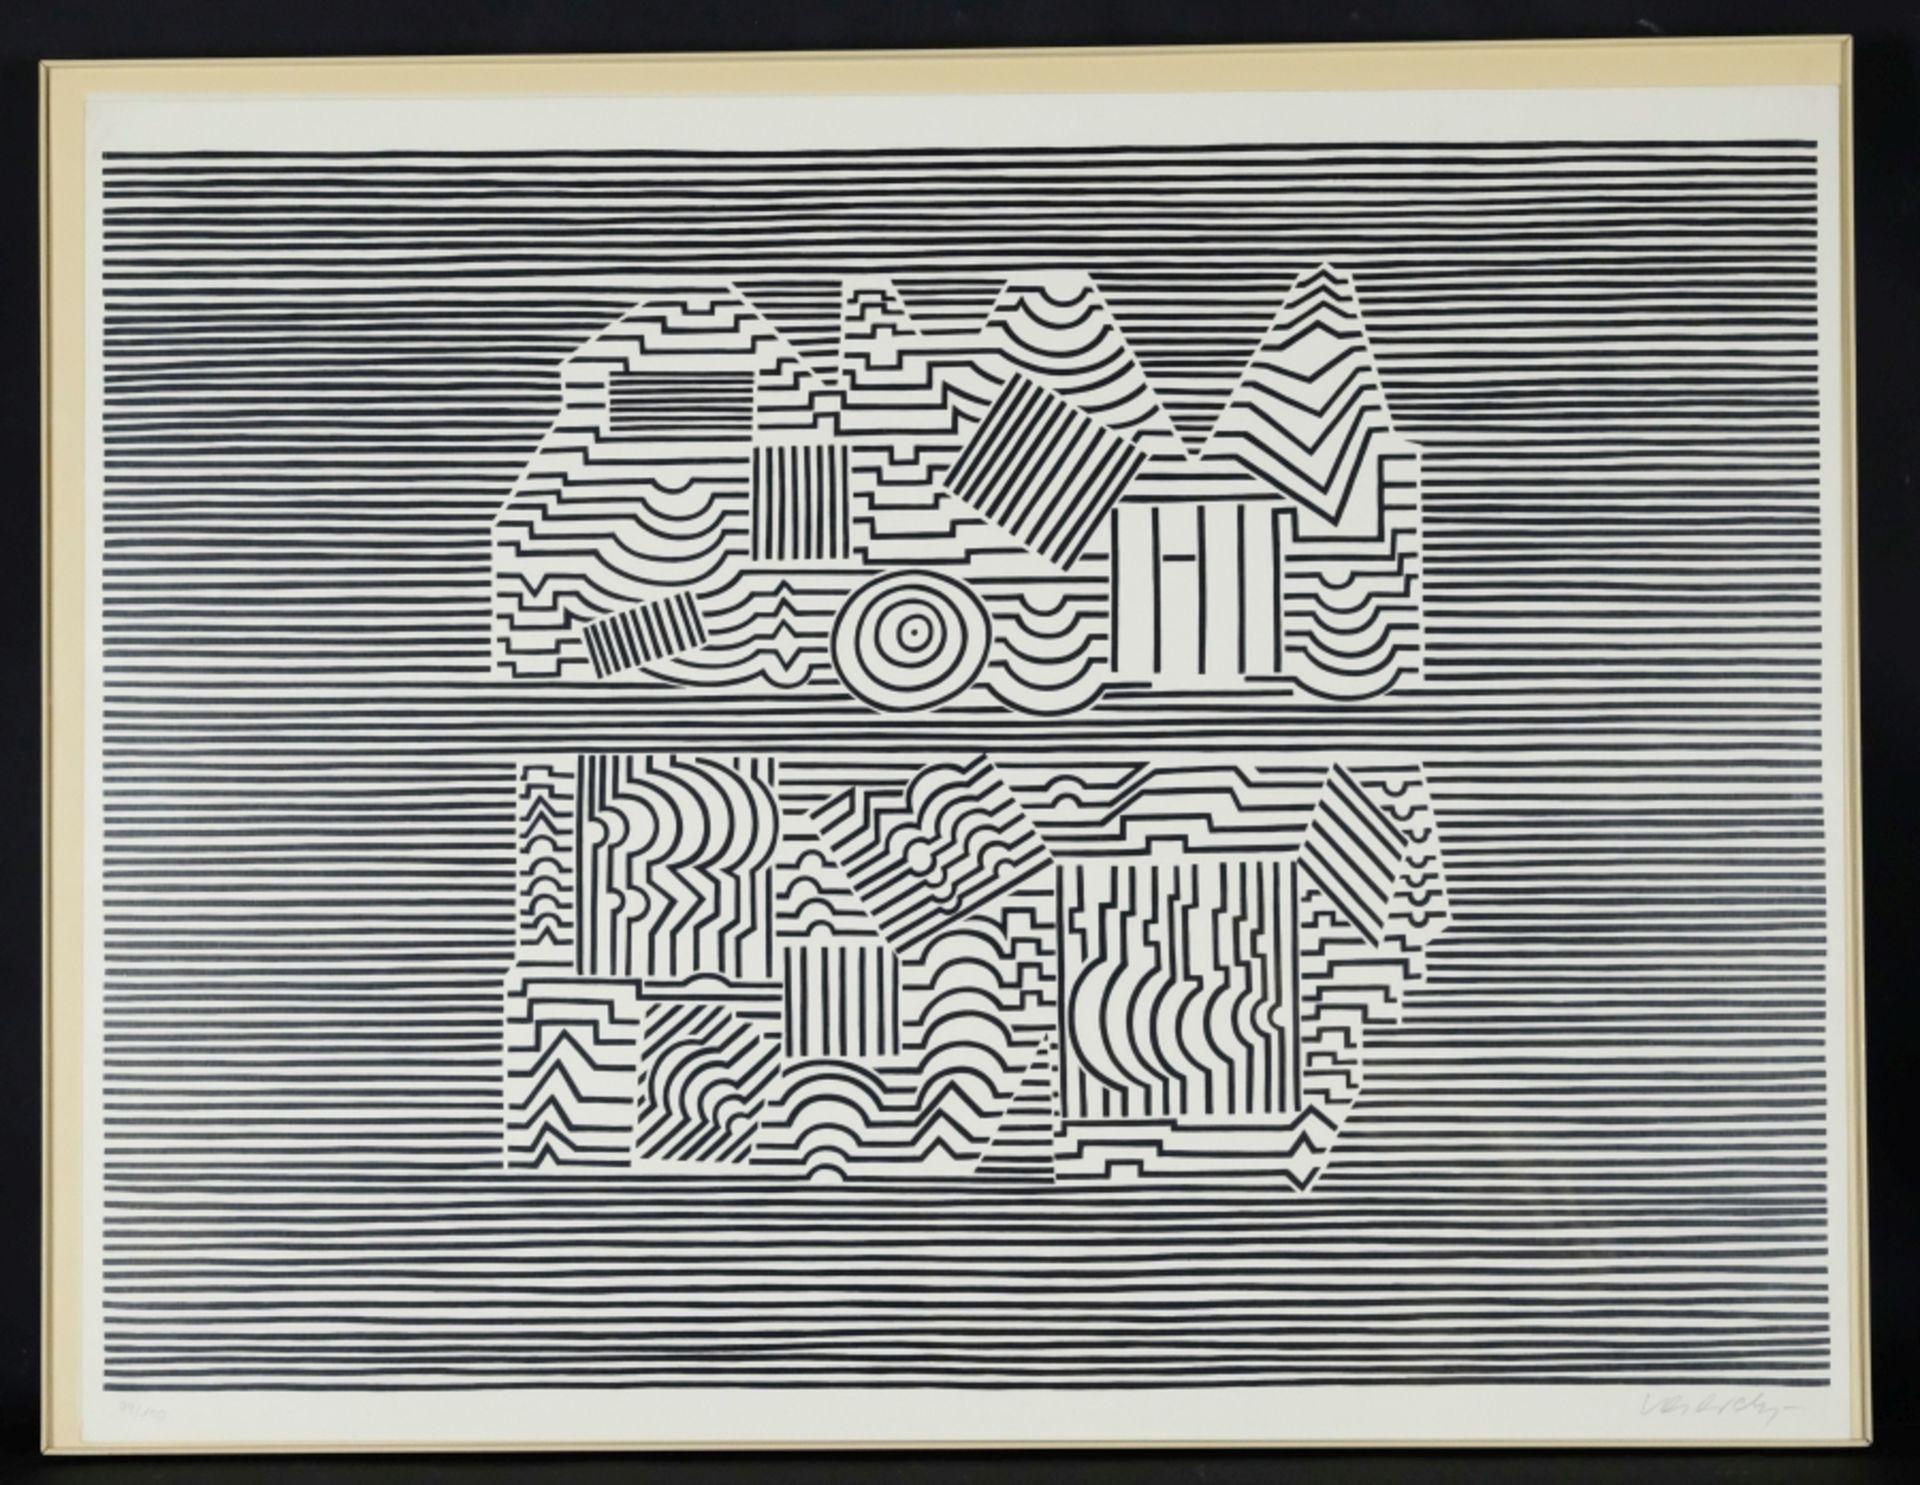 Vasarely, Victor (1906- 1997) "Photographisme", 1951, Serigraphie auf Karton.